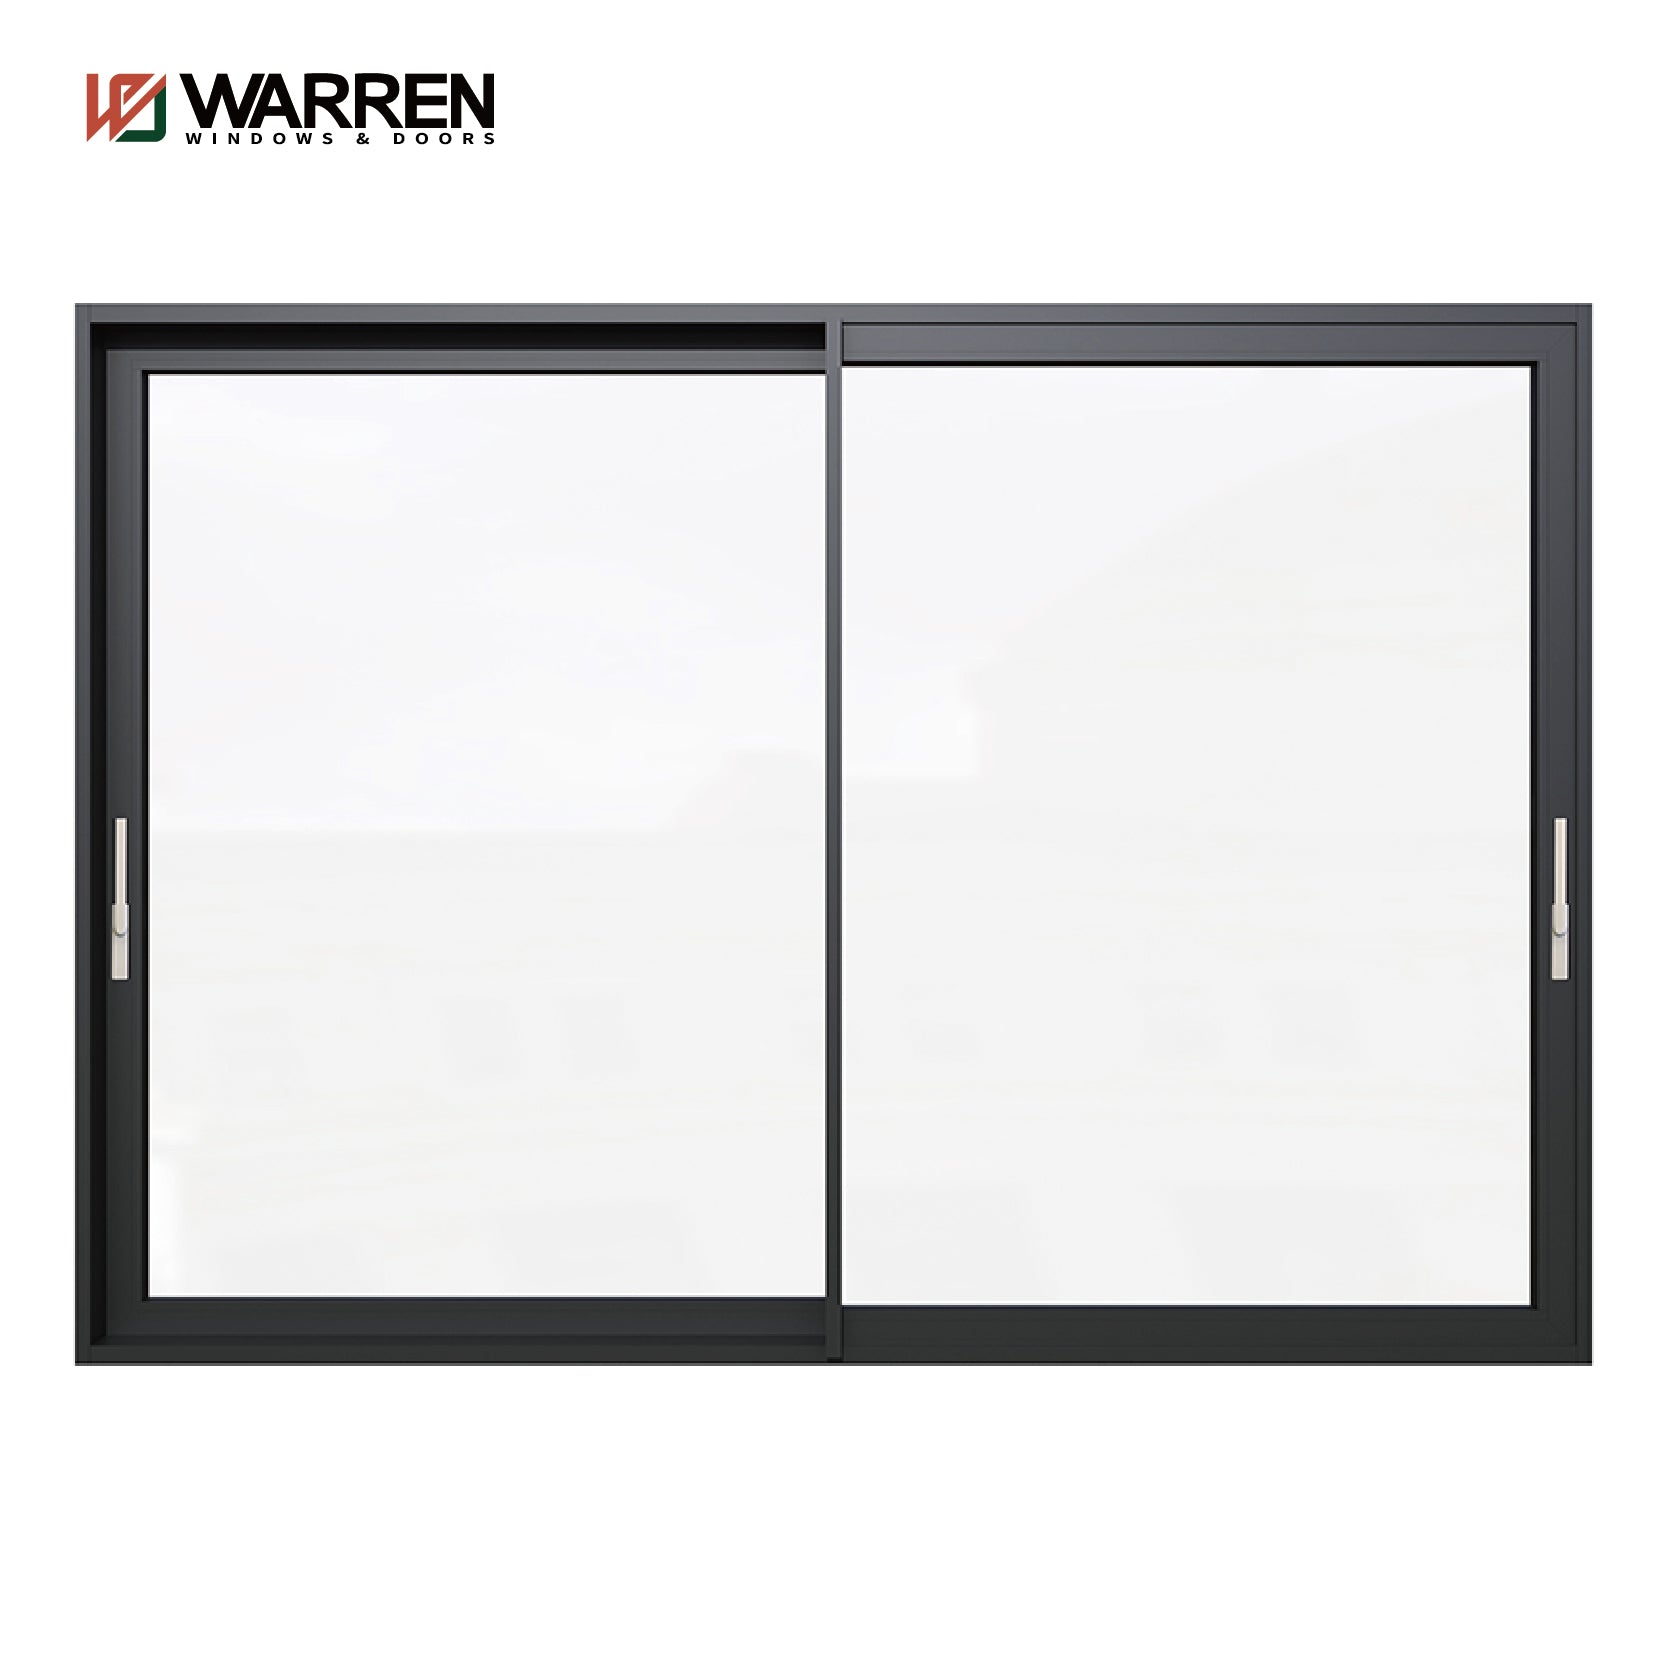 Warren Factory Sale Lift And Sliding Doors Superhouse Aluminium Frame Doors Used For Modern Sunroom